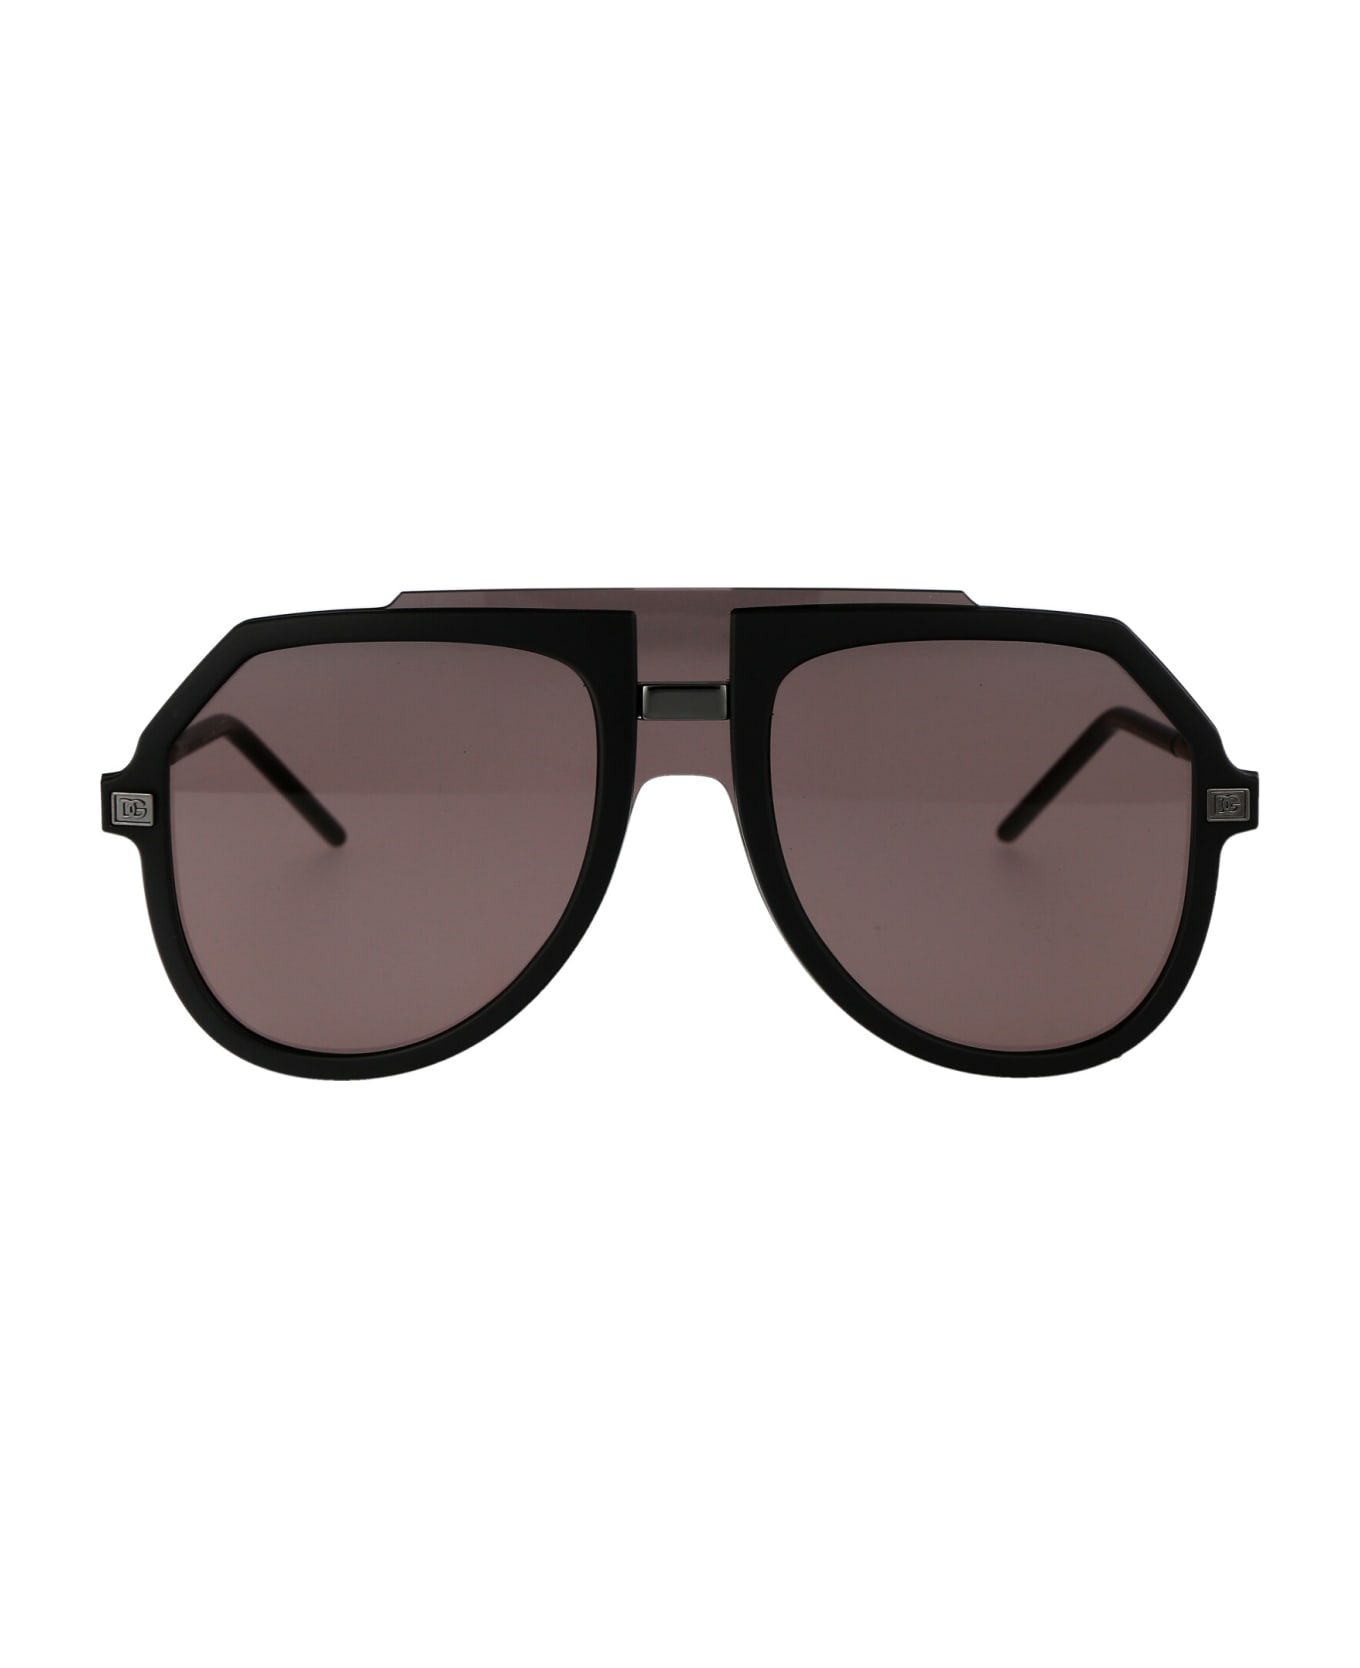 Dolce & Gabbana Eyewear 0dg6195 Sunglasses - 25257N Matte Black